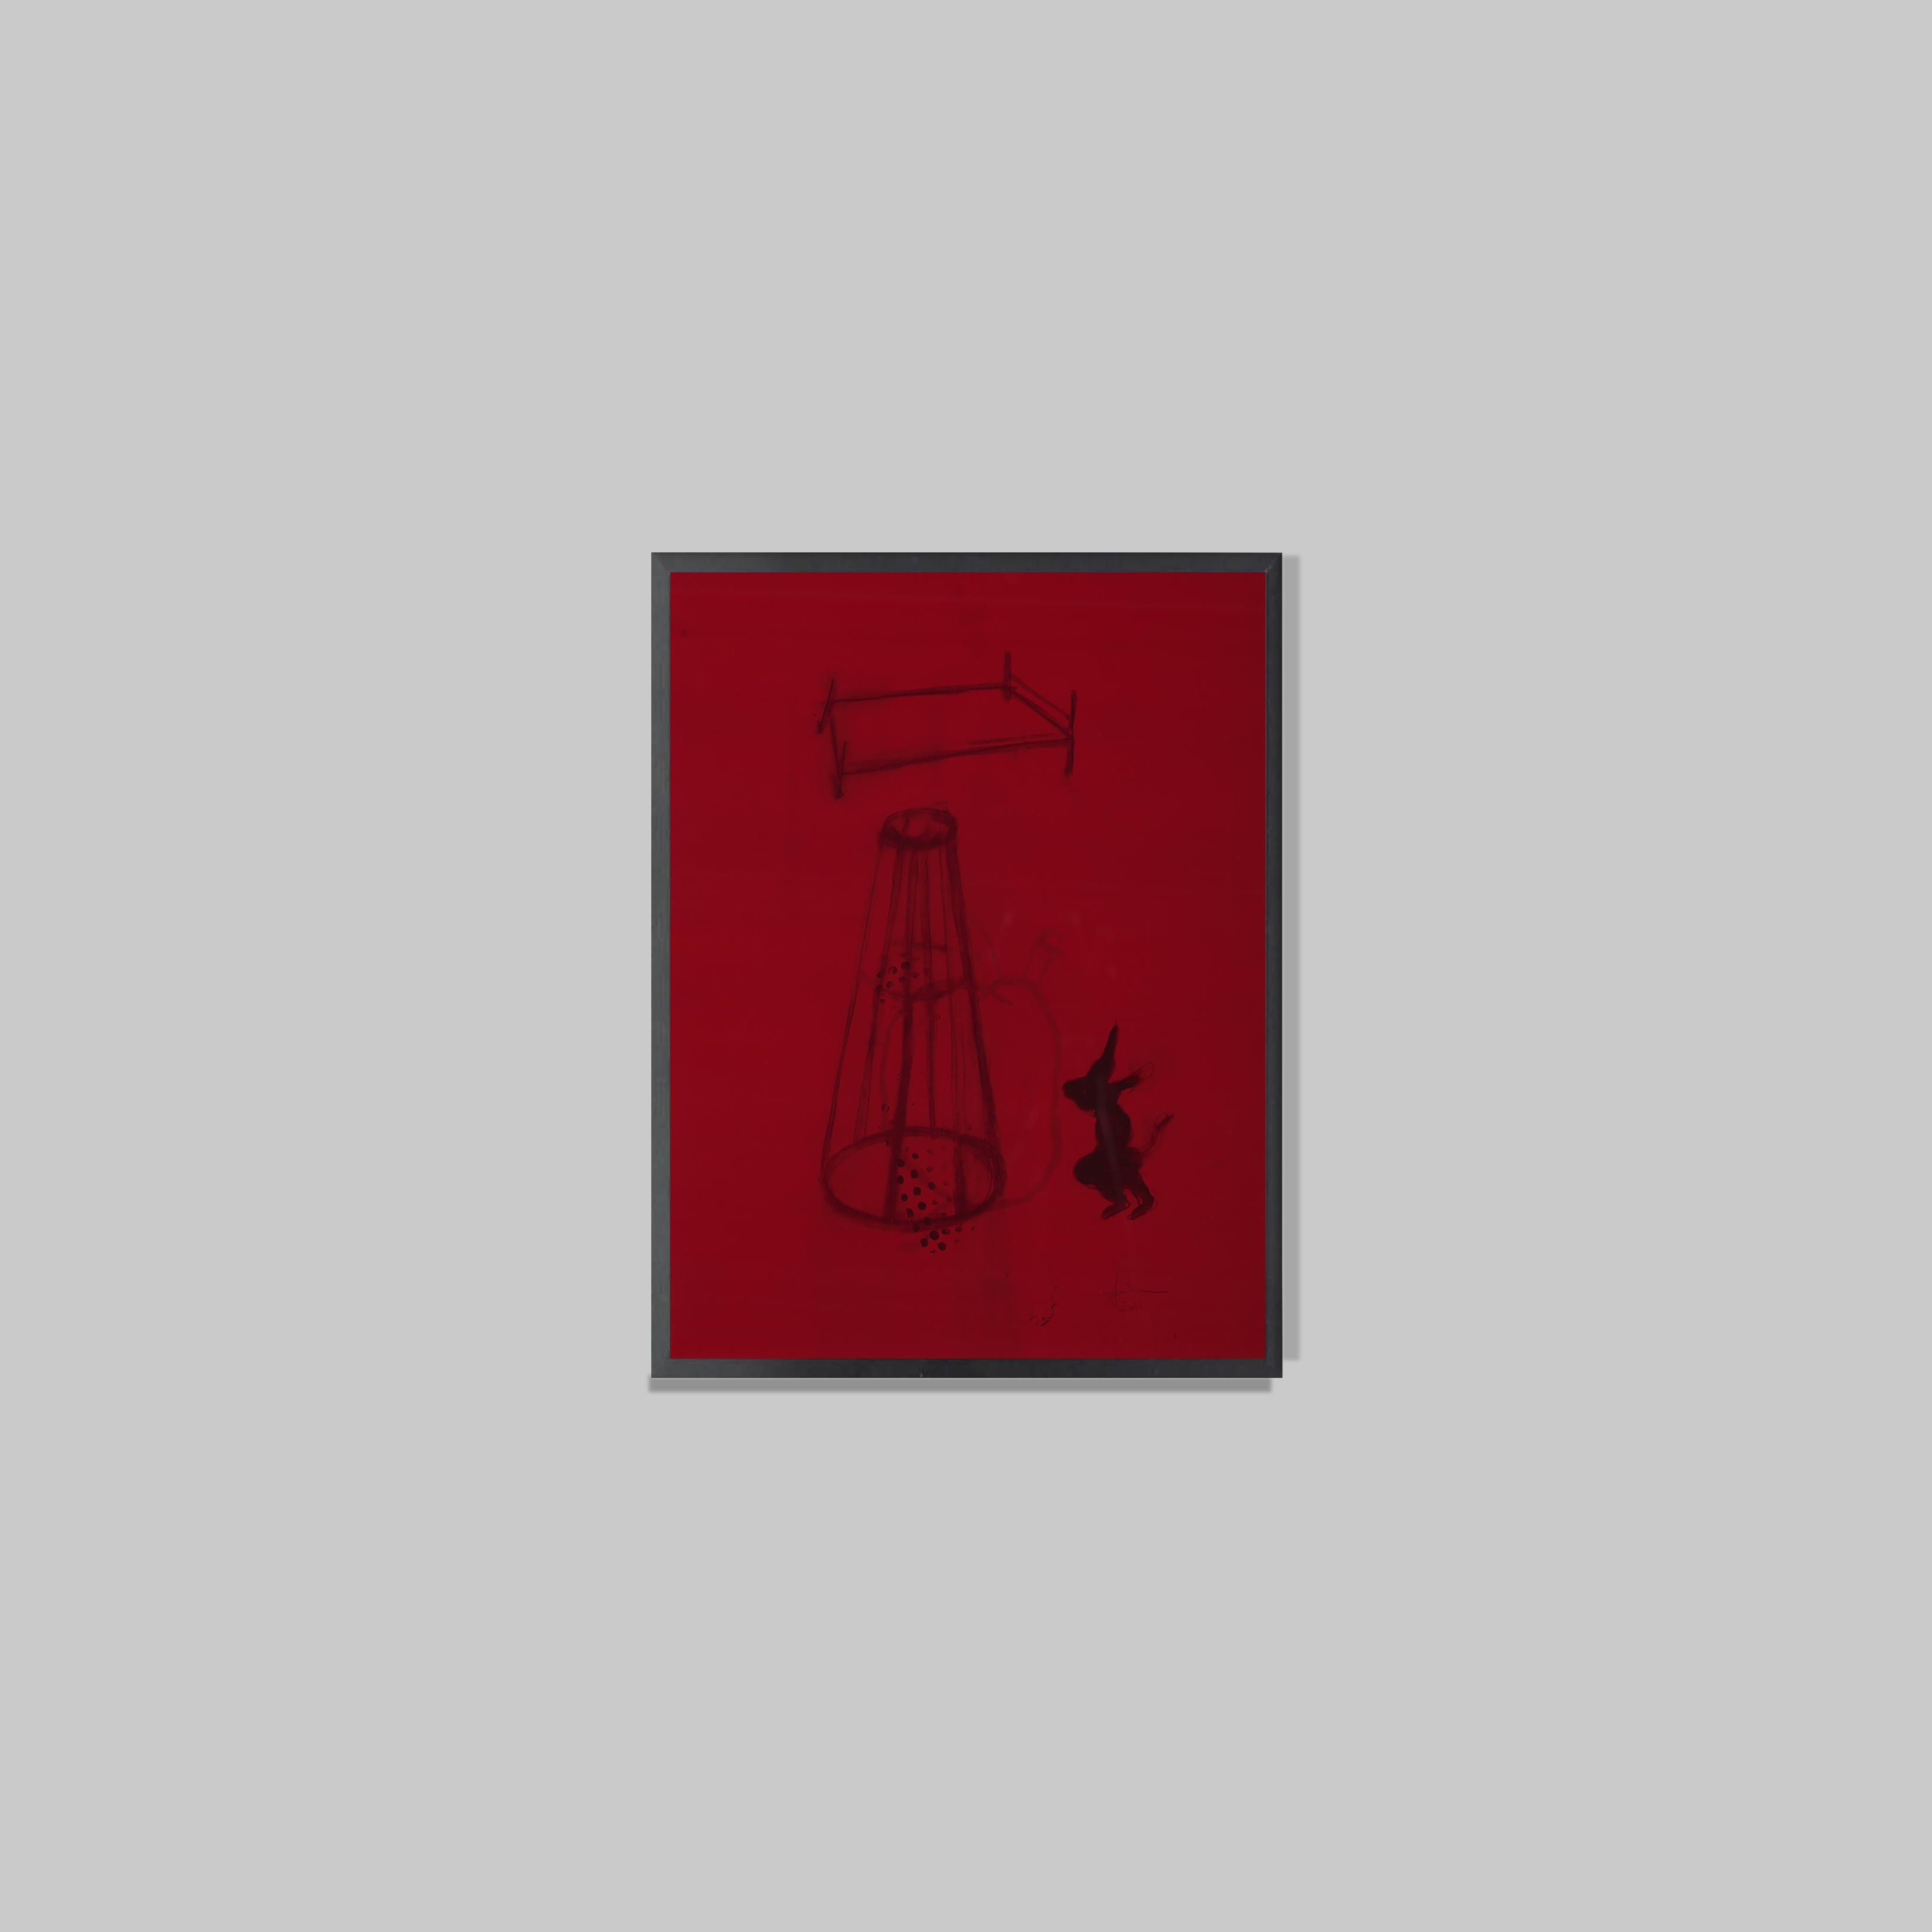 Amina Benbouchta
Anima, 2014
Crayon, papier verre rouge Iraki
32 x 21  cm